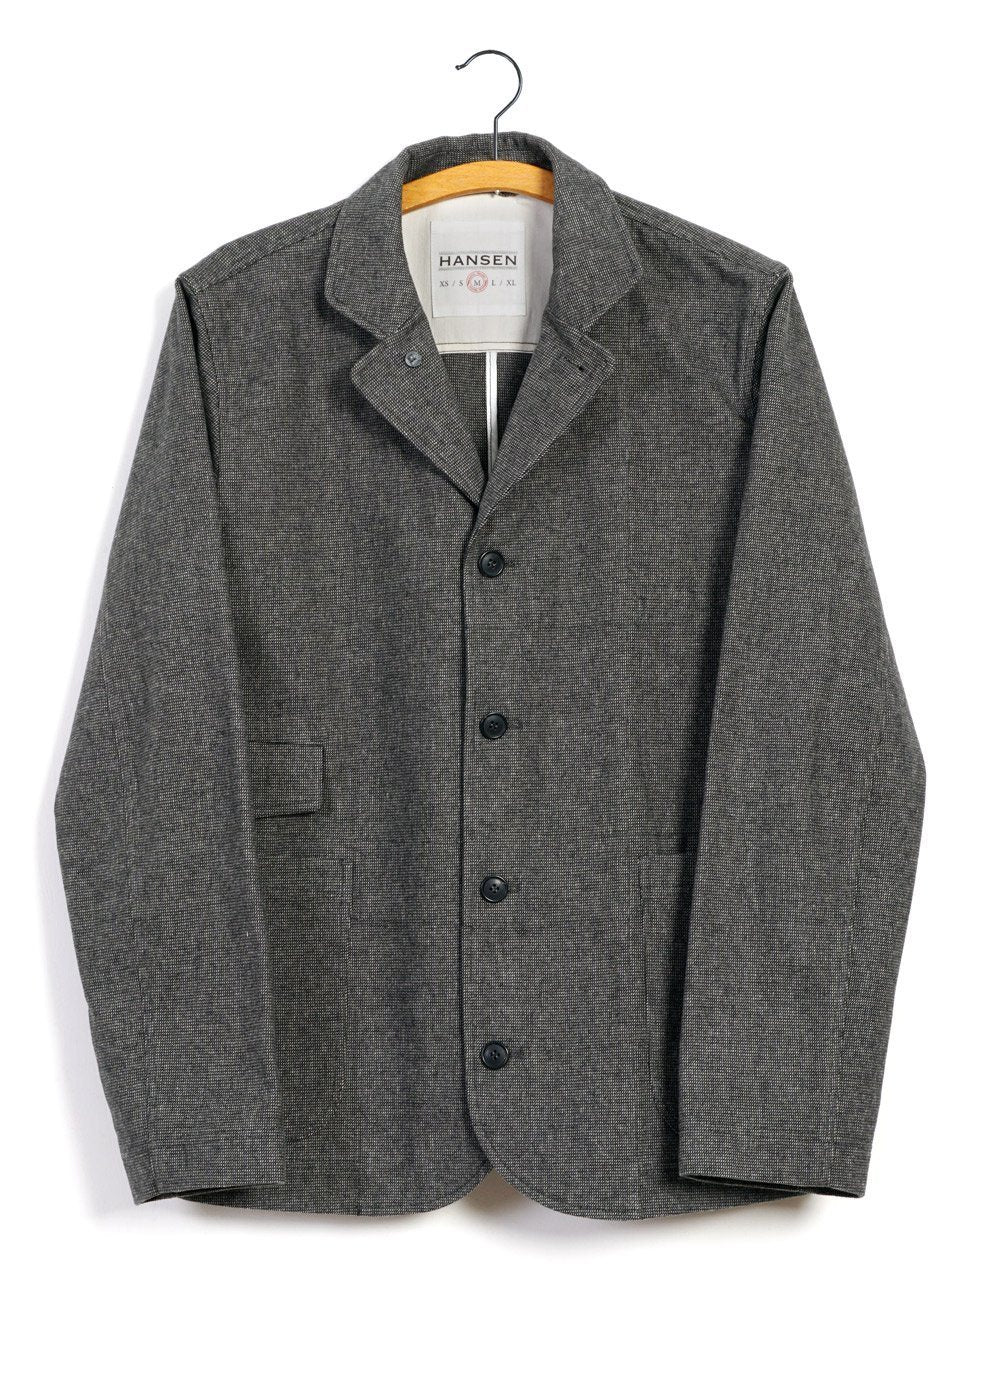 HANSEN Garments - JASPER | Casual Everyday Jacket Blazer | Gravel - HANSEN Garments